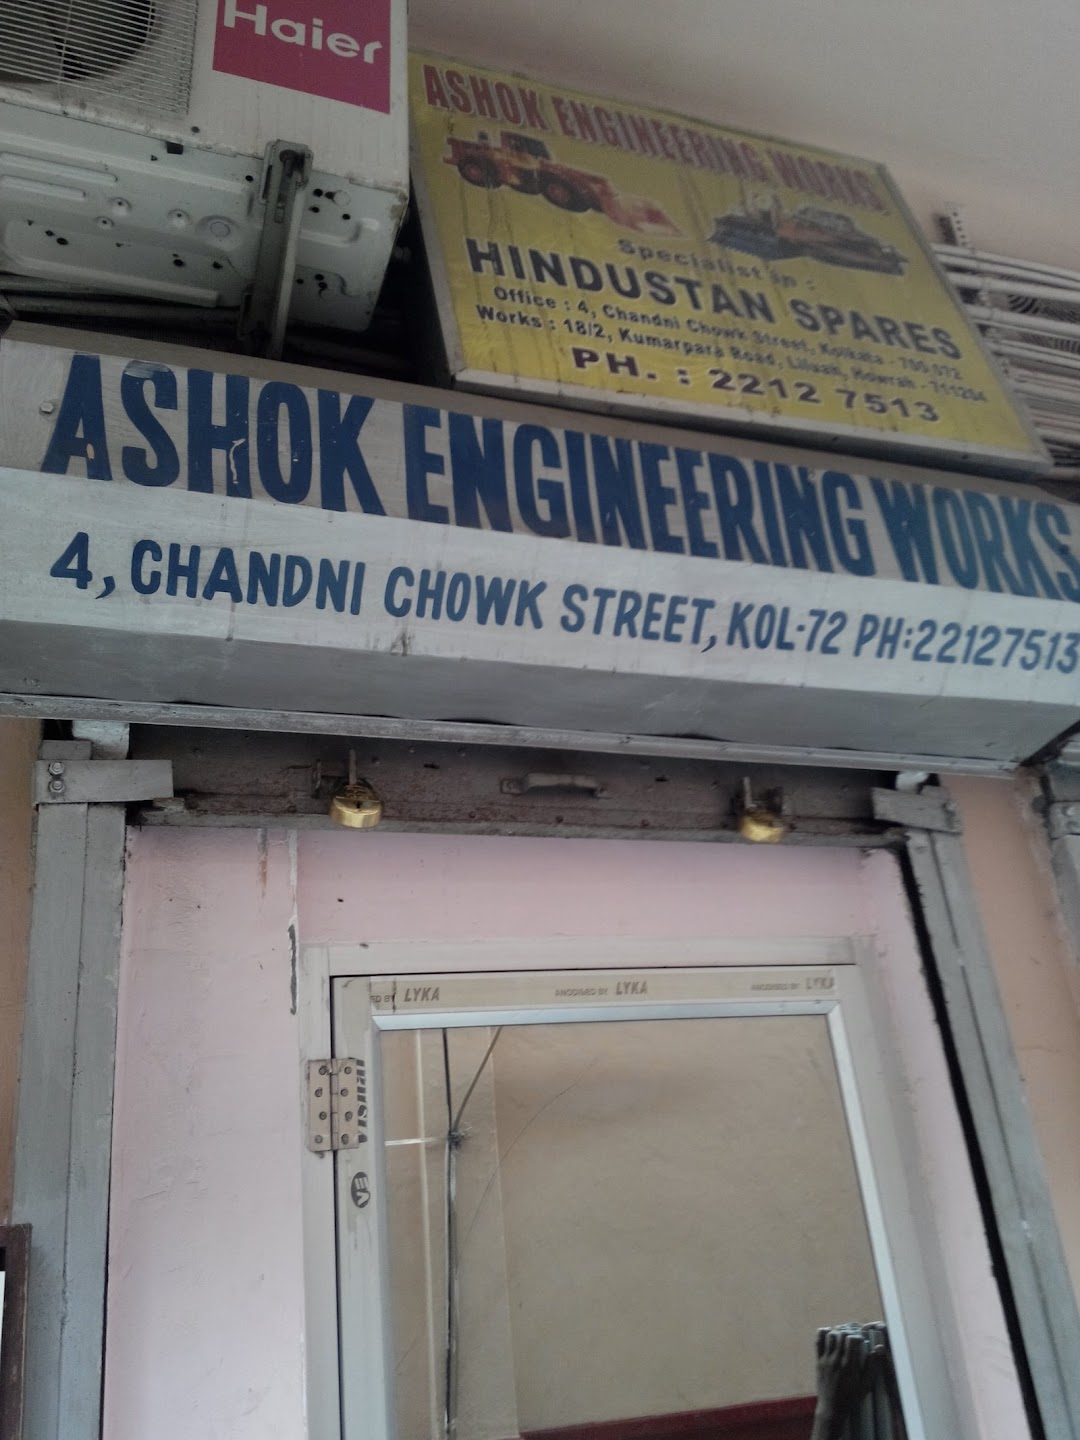 Ashok Engineering Works